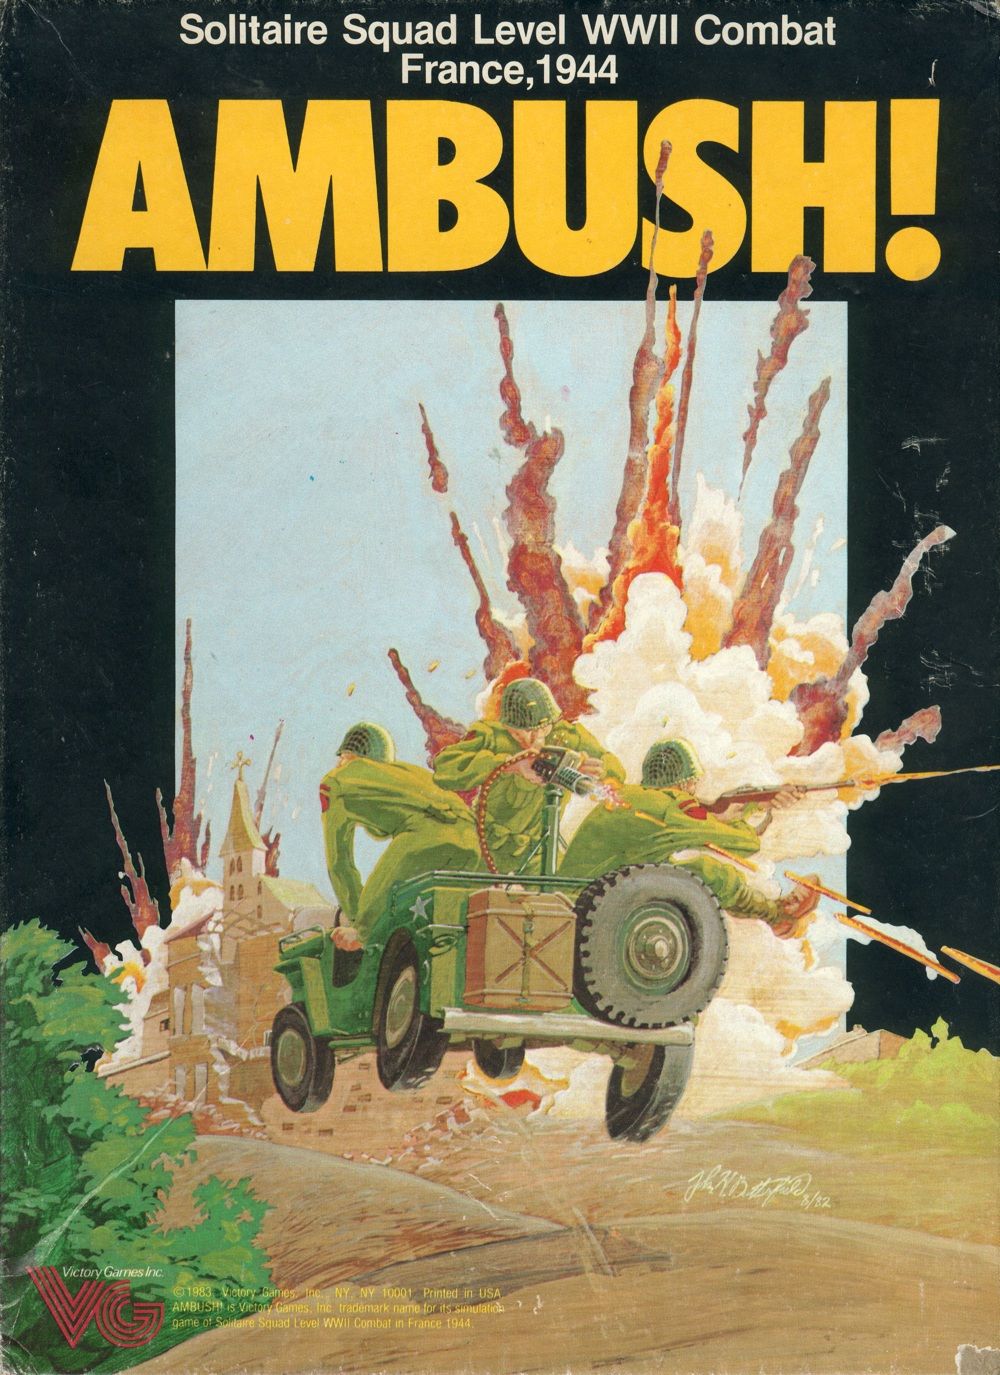 Ambush!